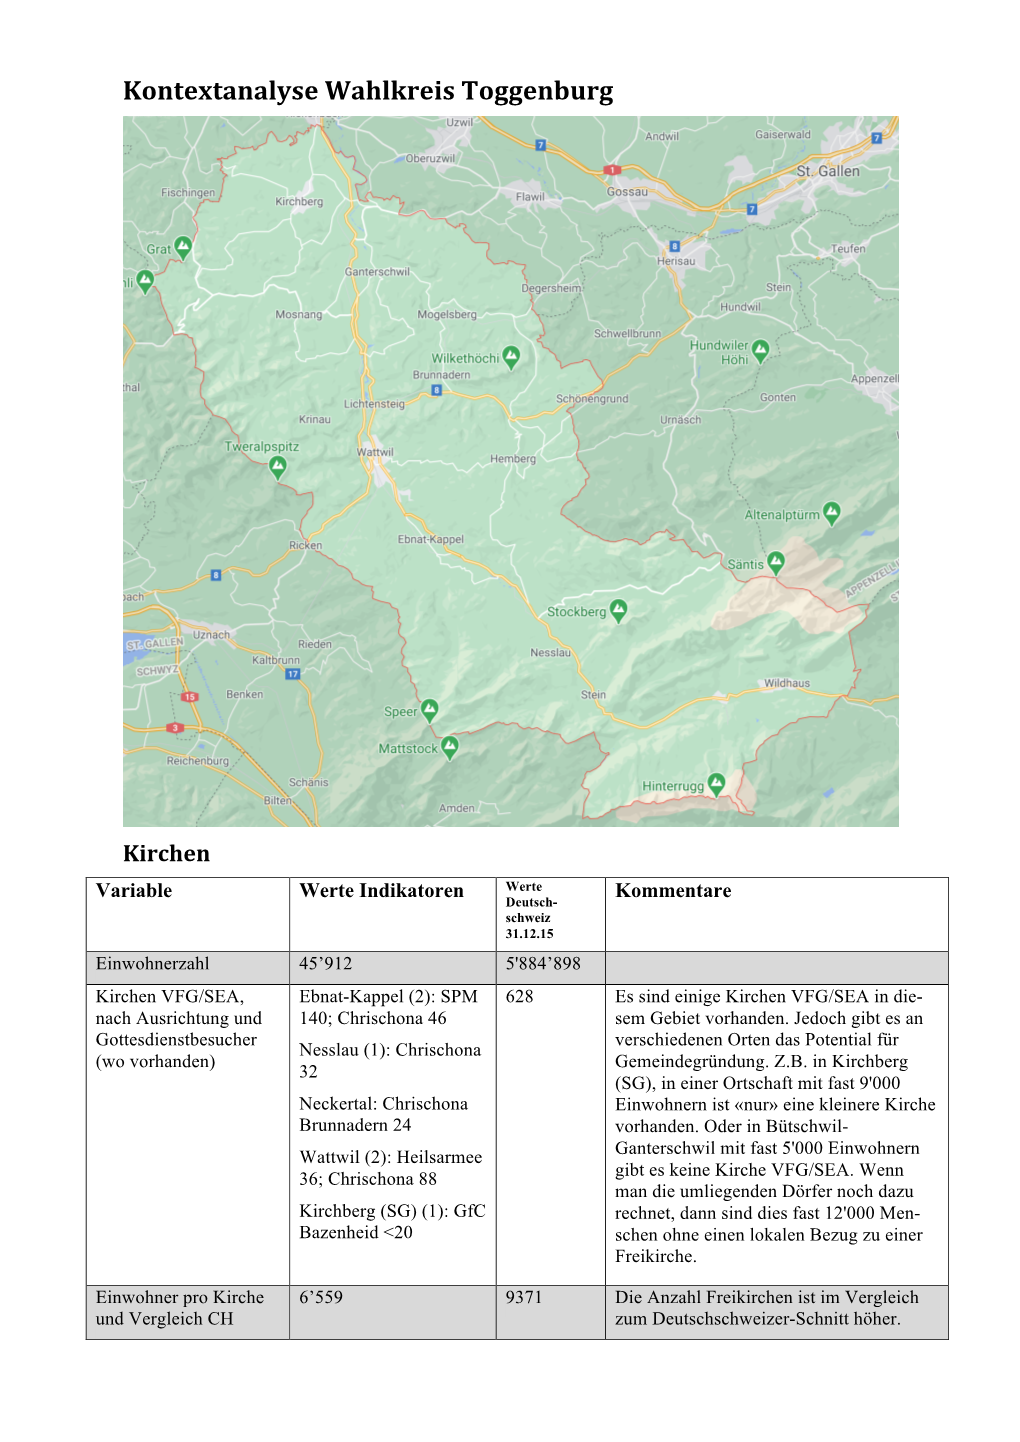 Toggenburg-Wahlkreis Kontextanalyse.Pdf